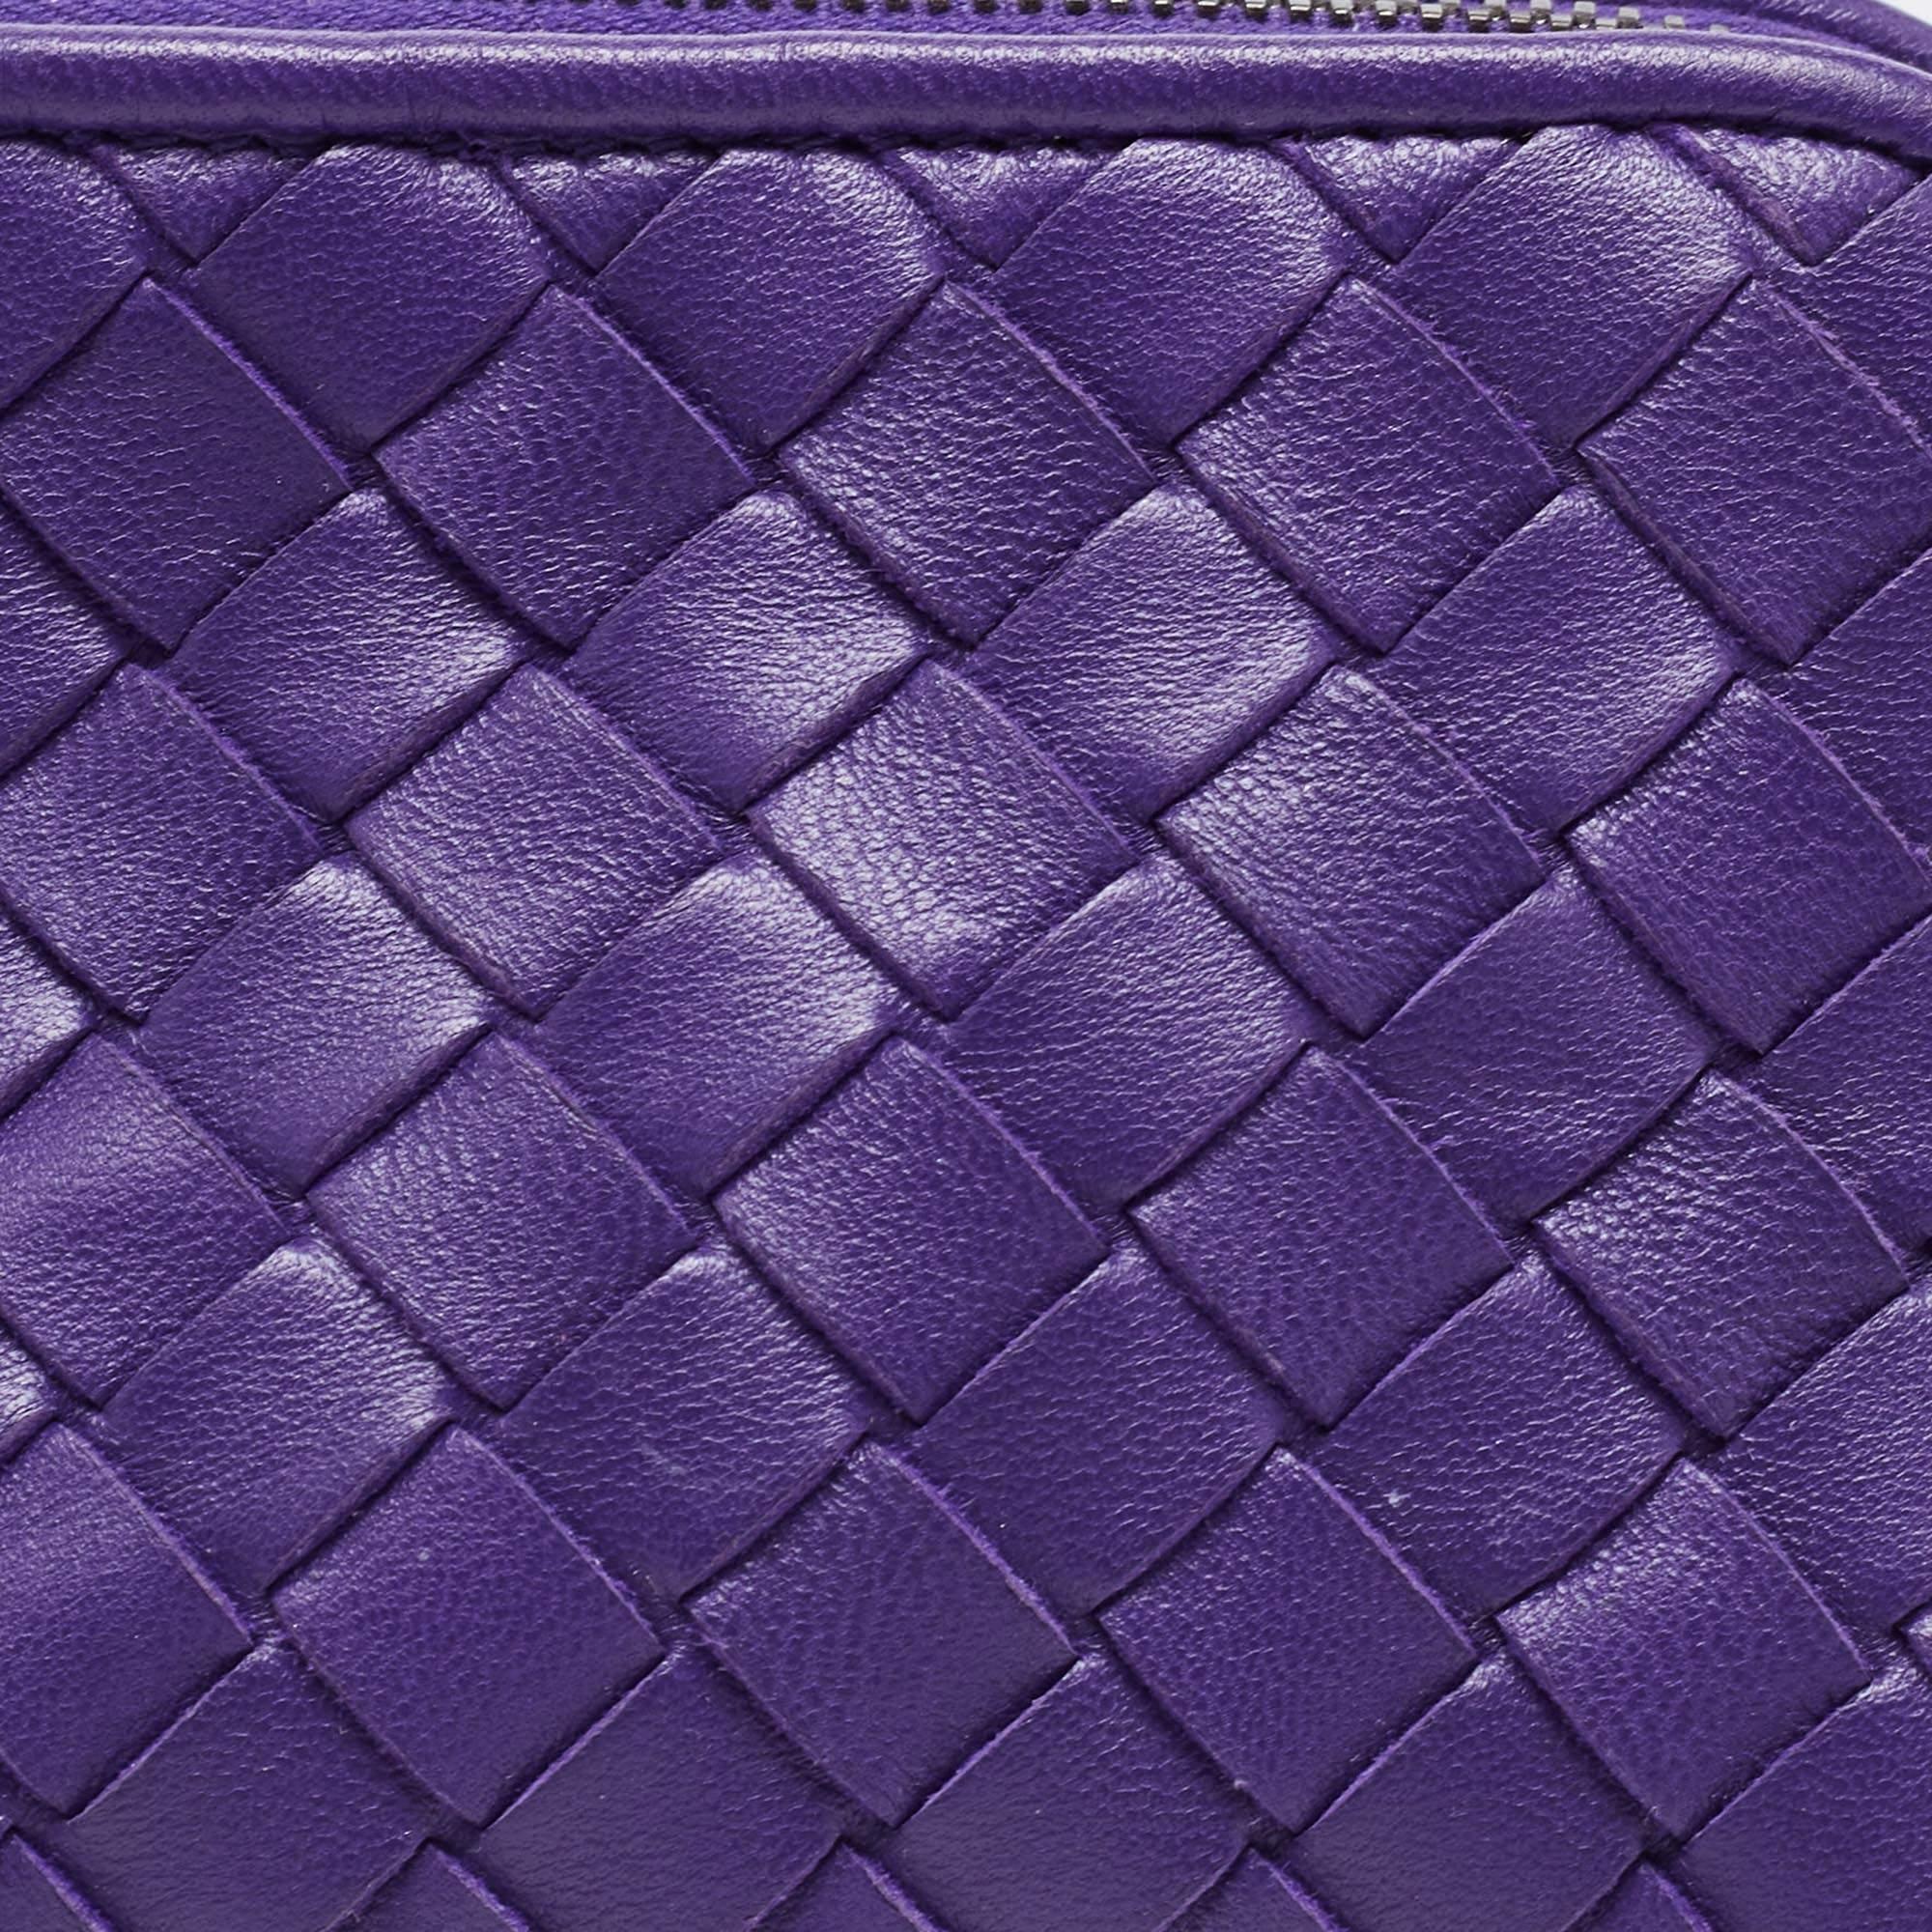 Bottega Veneta Purple Intrecciato Leather Zip Purse For Sale 4